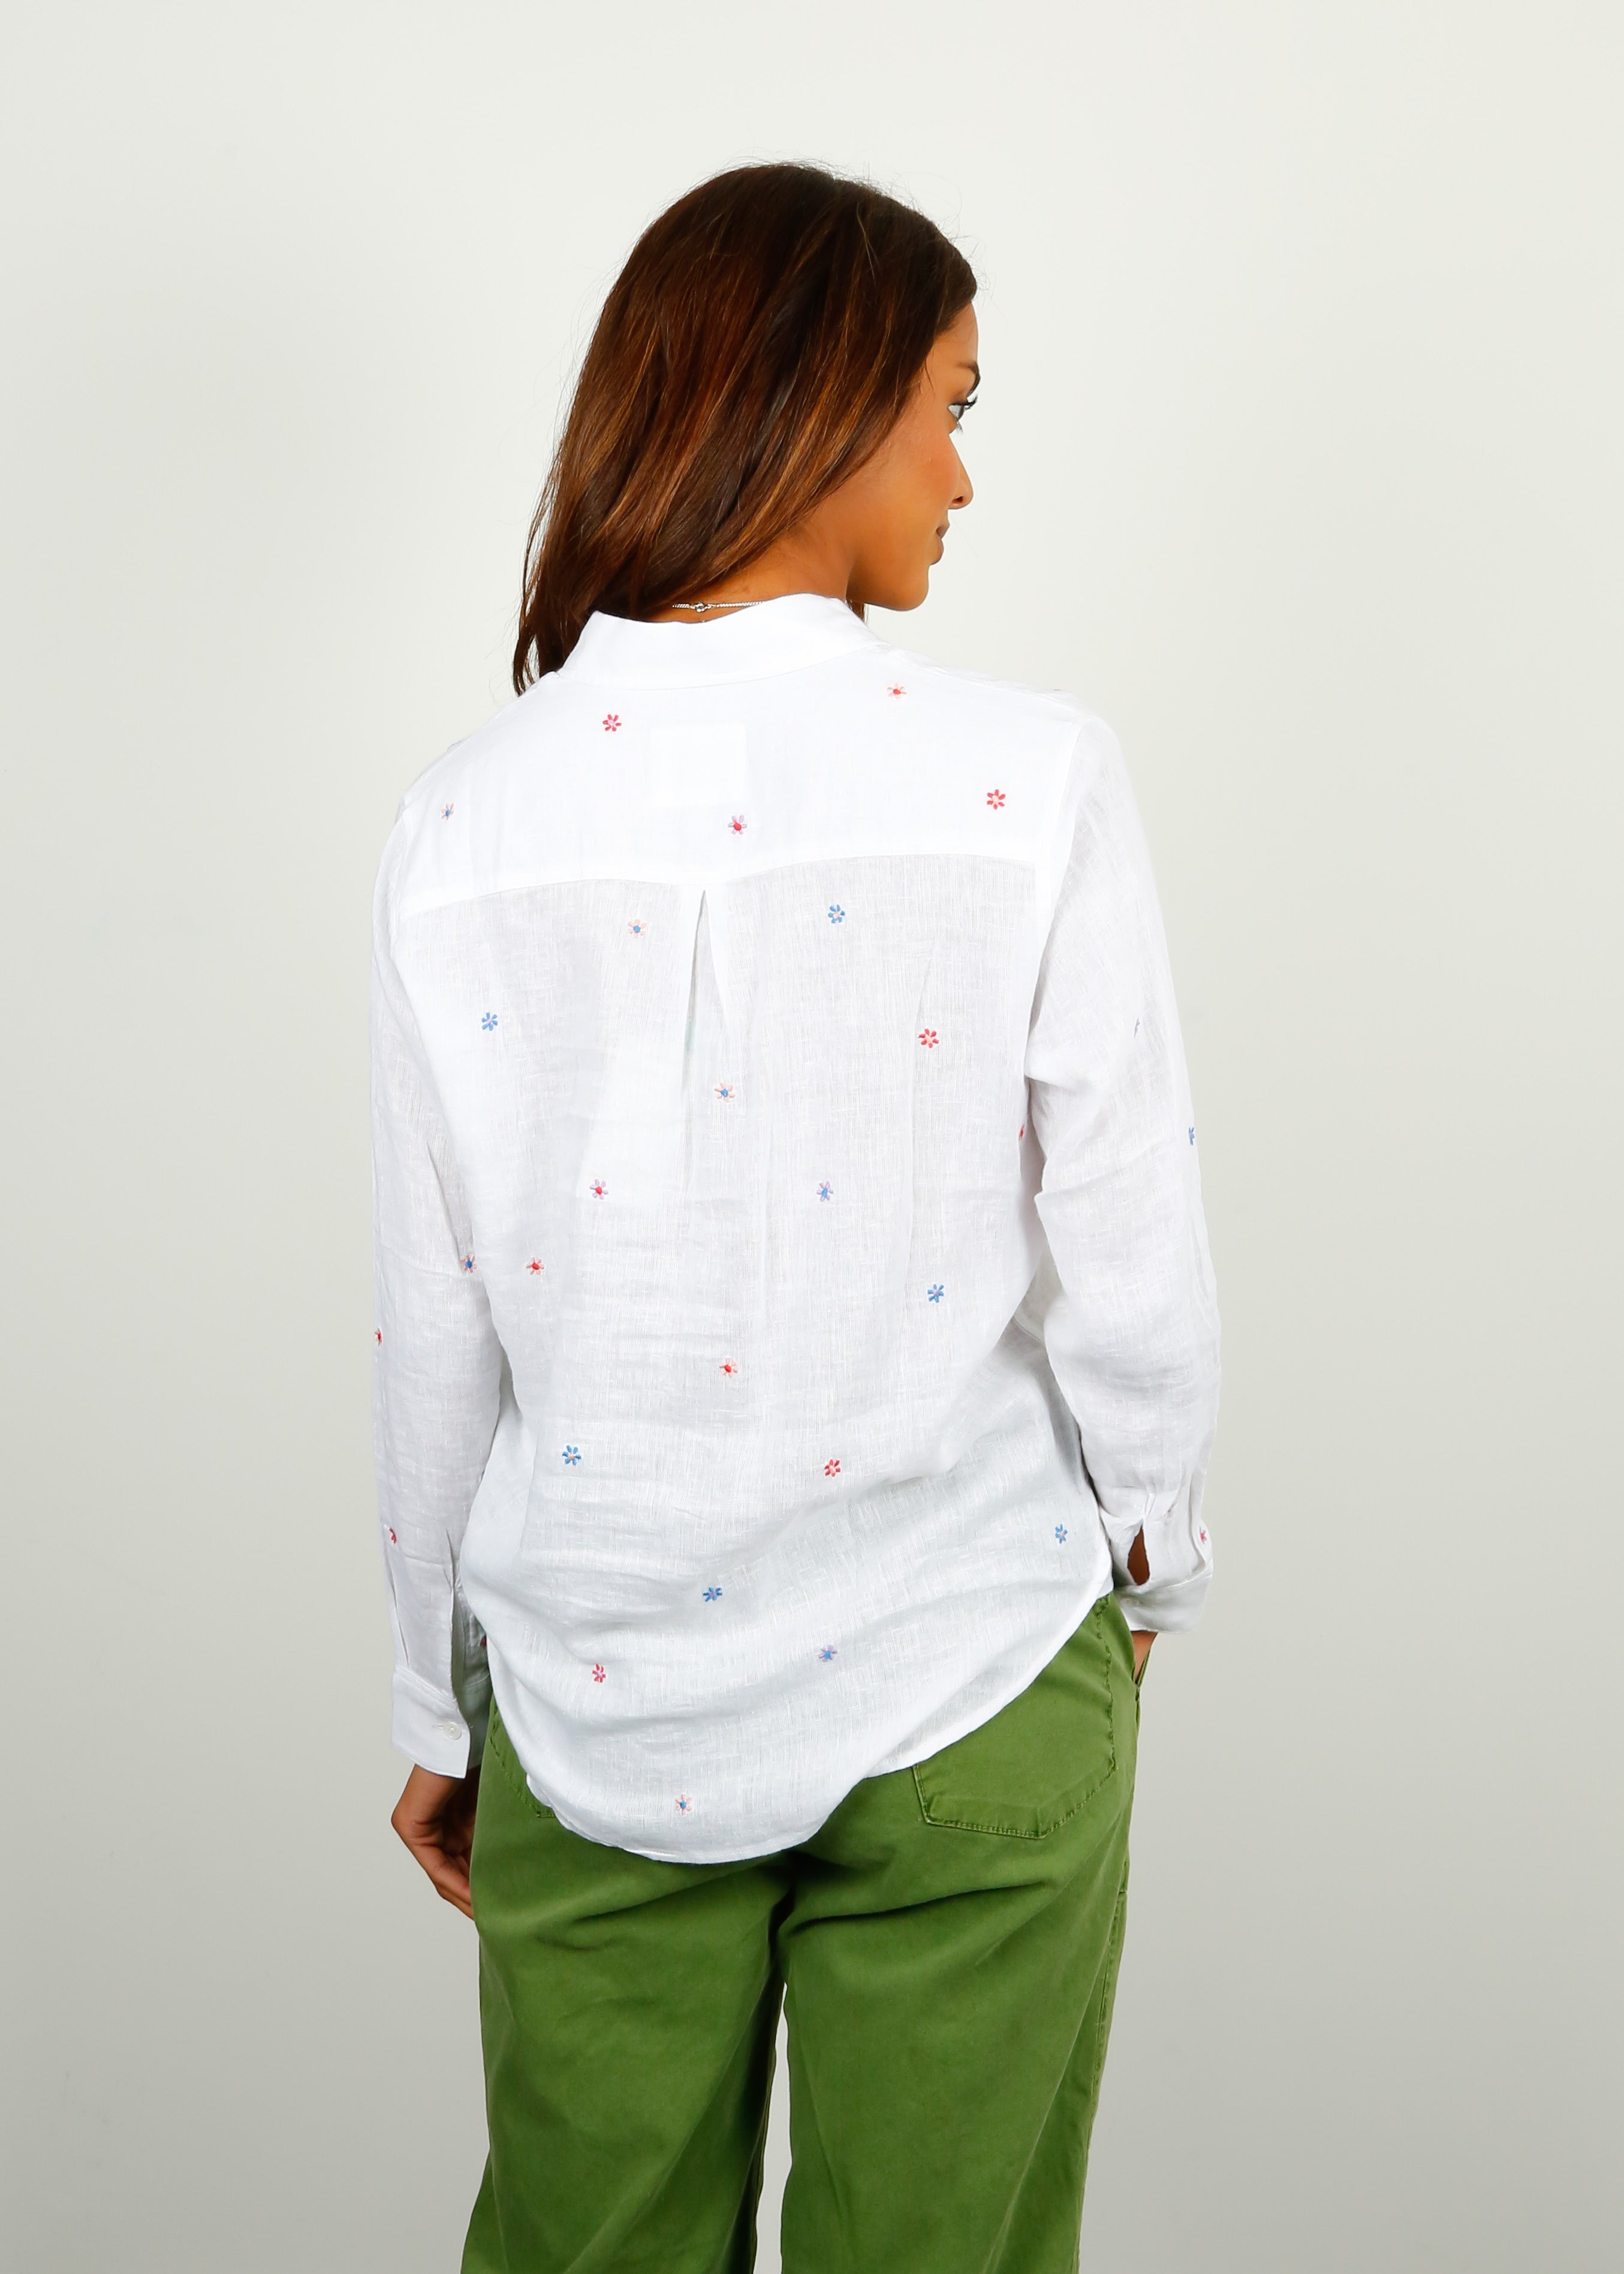 RAILS Charli Shirt in Multi Daisy Embroidery